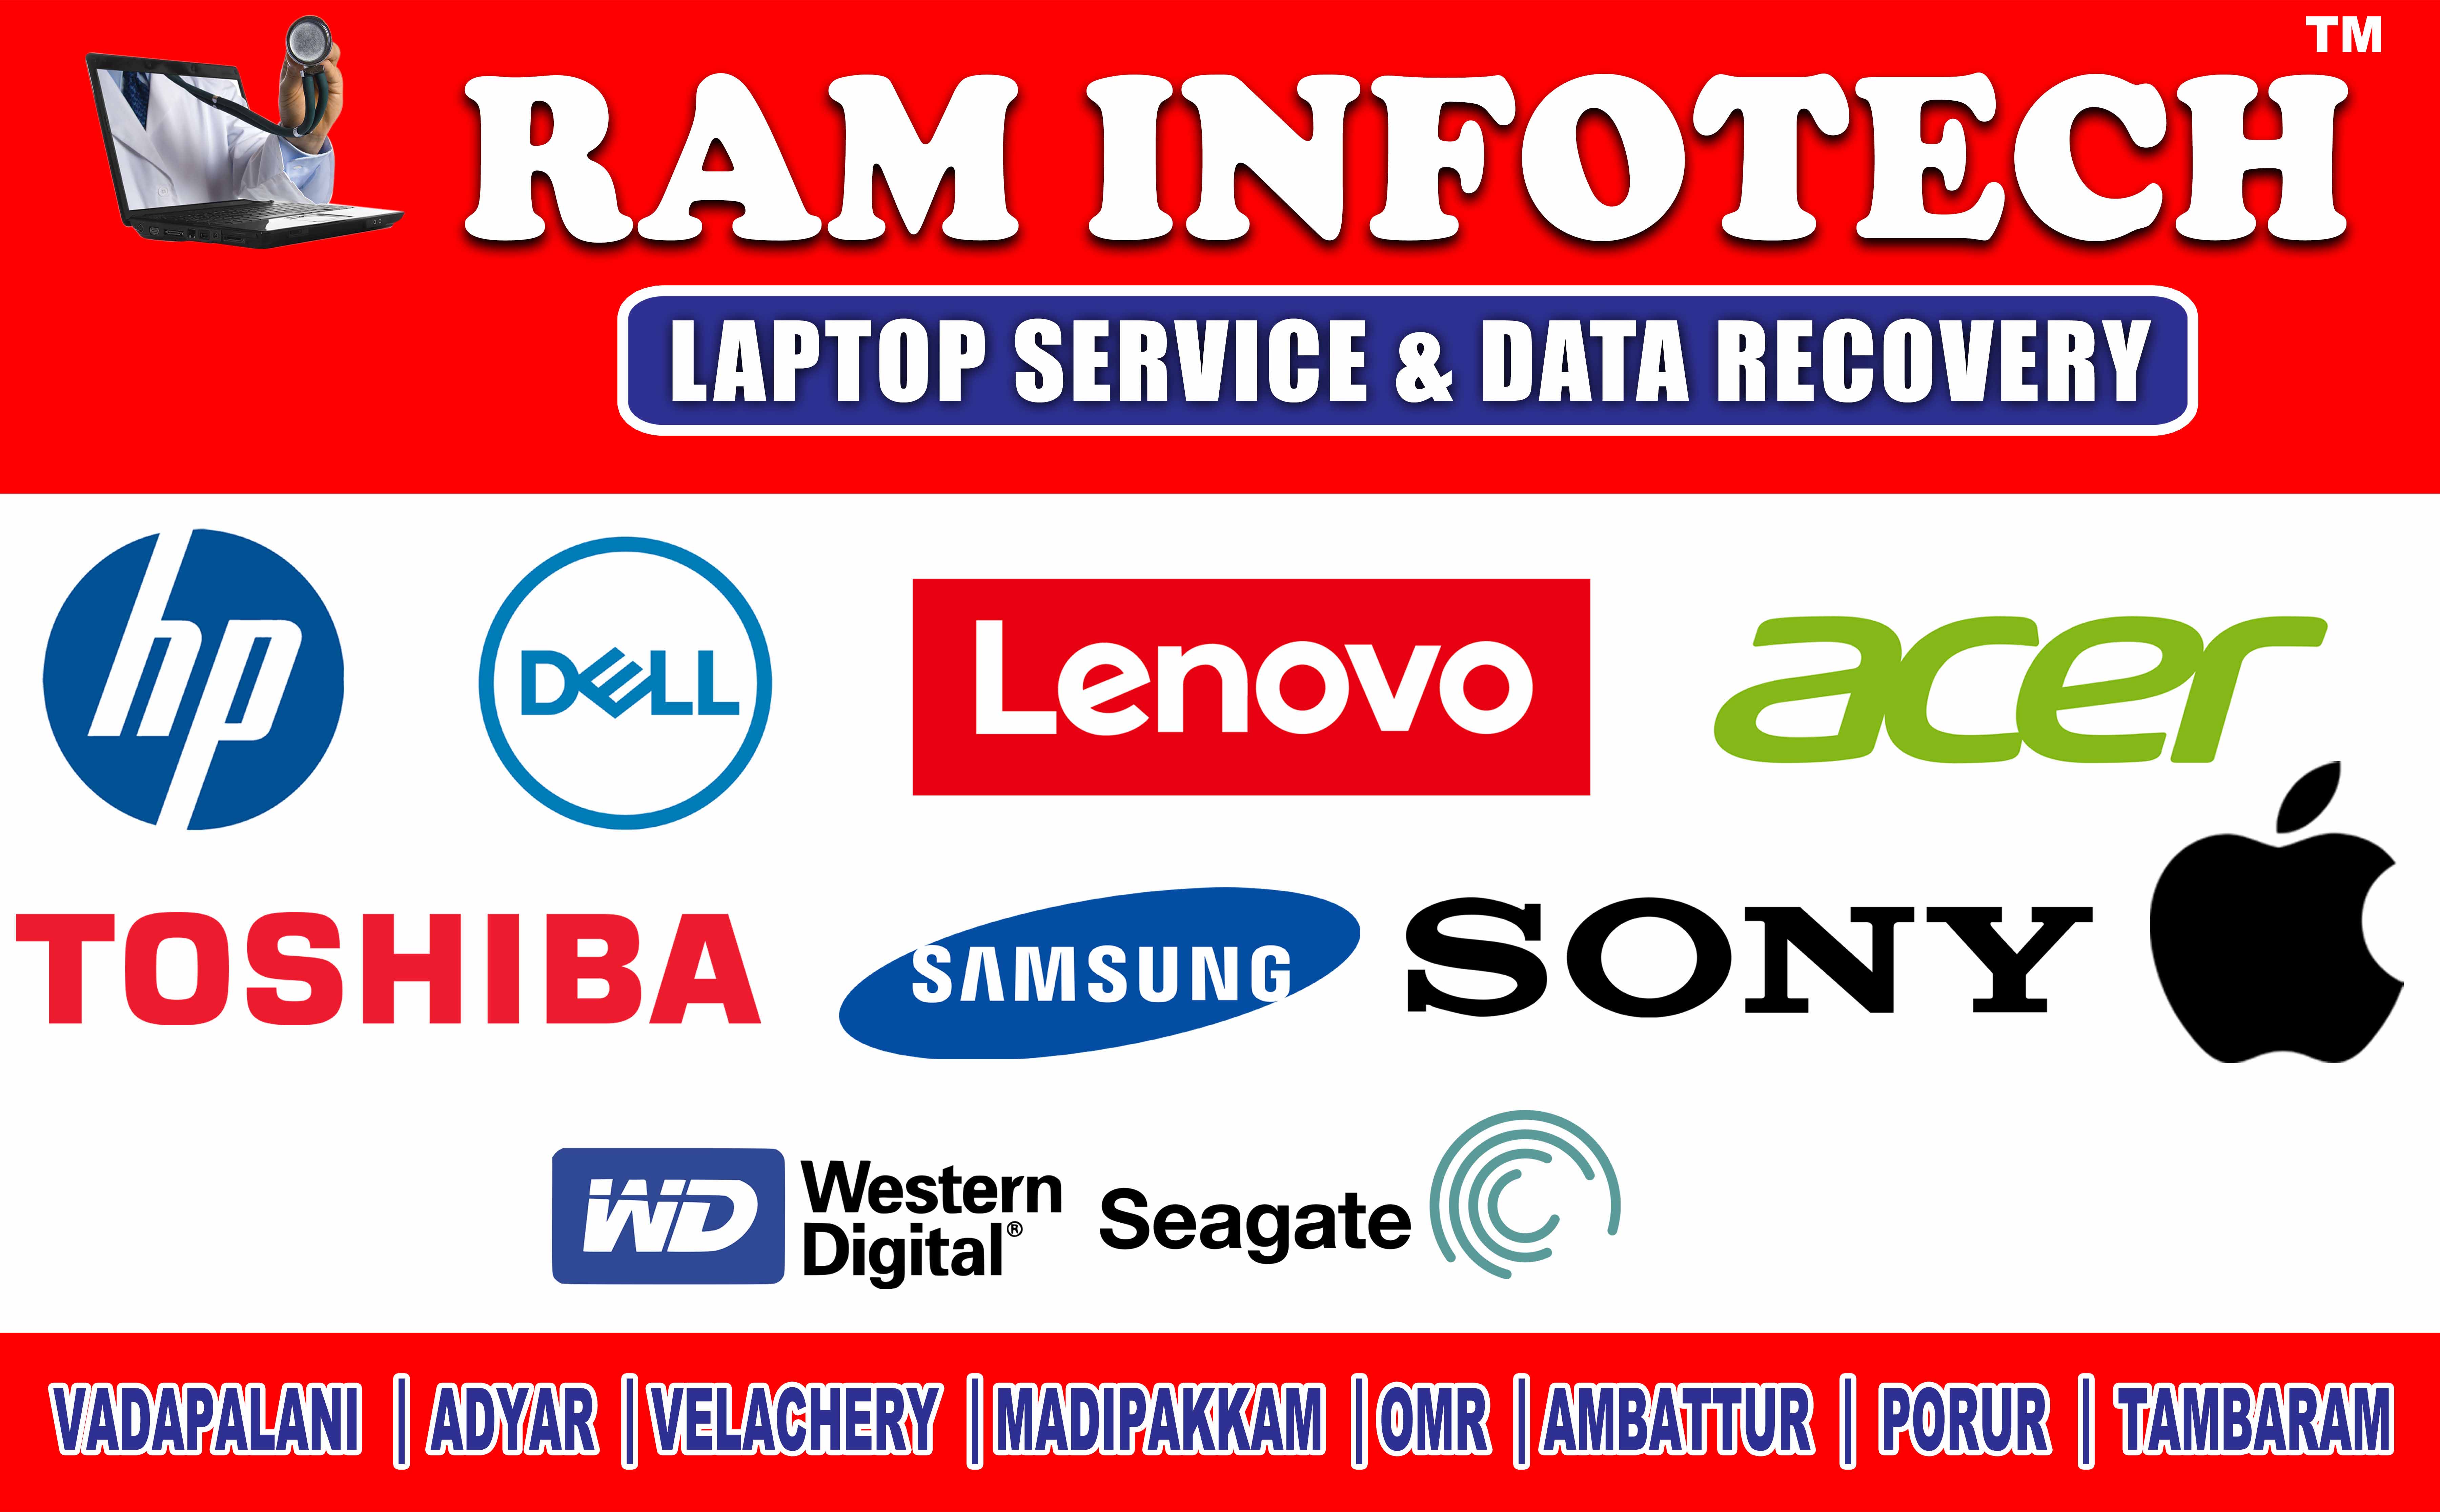 Authorized Laptop service center in Chennai